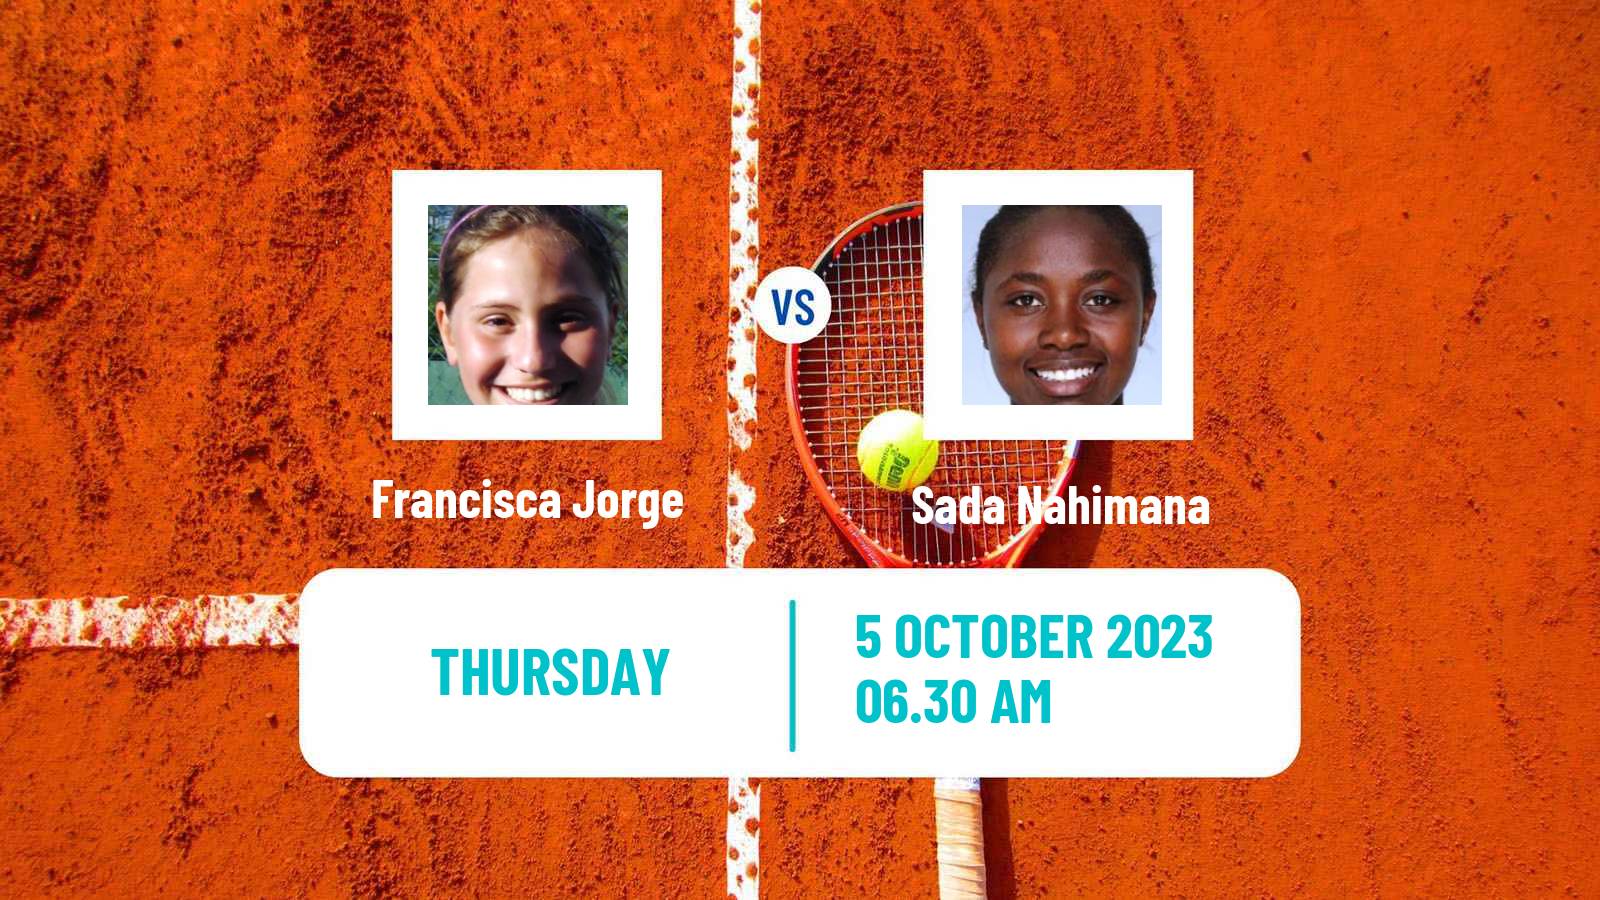 Tennis ITF W40 Lisbon Women Francisca Jorge - Sada Nahimana